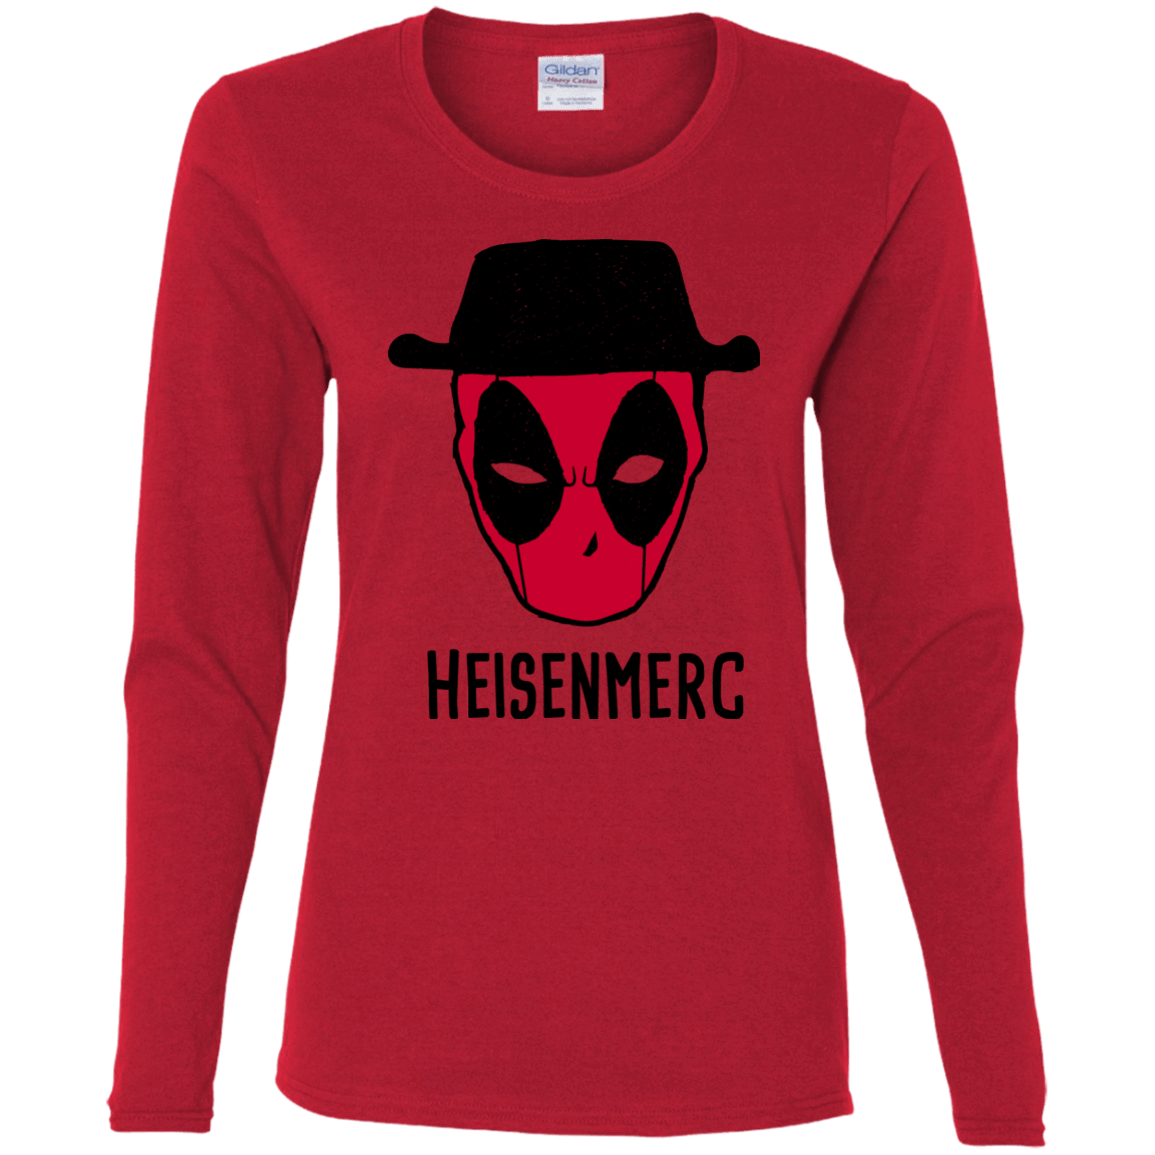 T-Shirts Red / S Heisenmerc Women's Long Sleeve T-Shirt